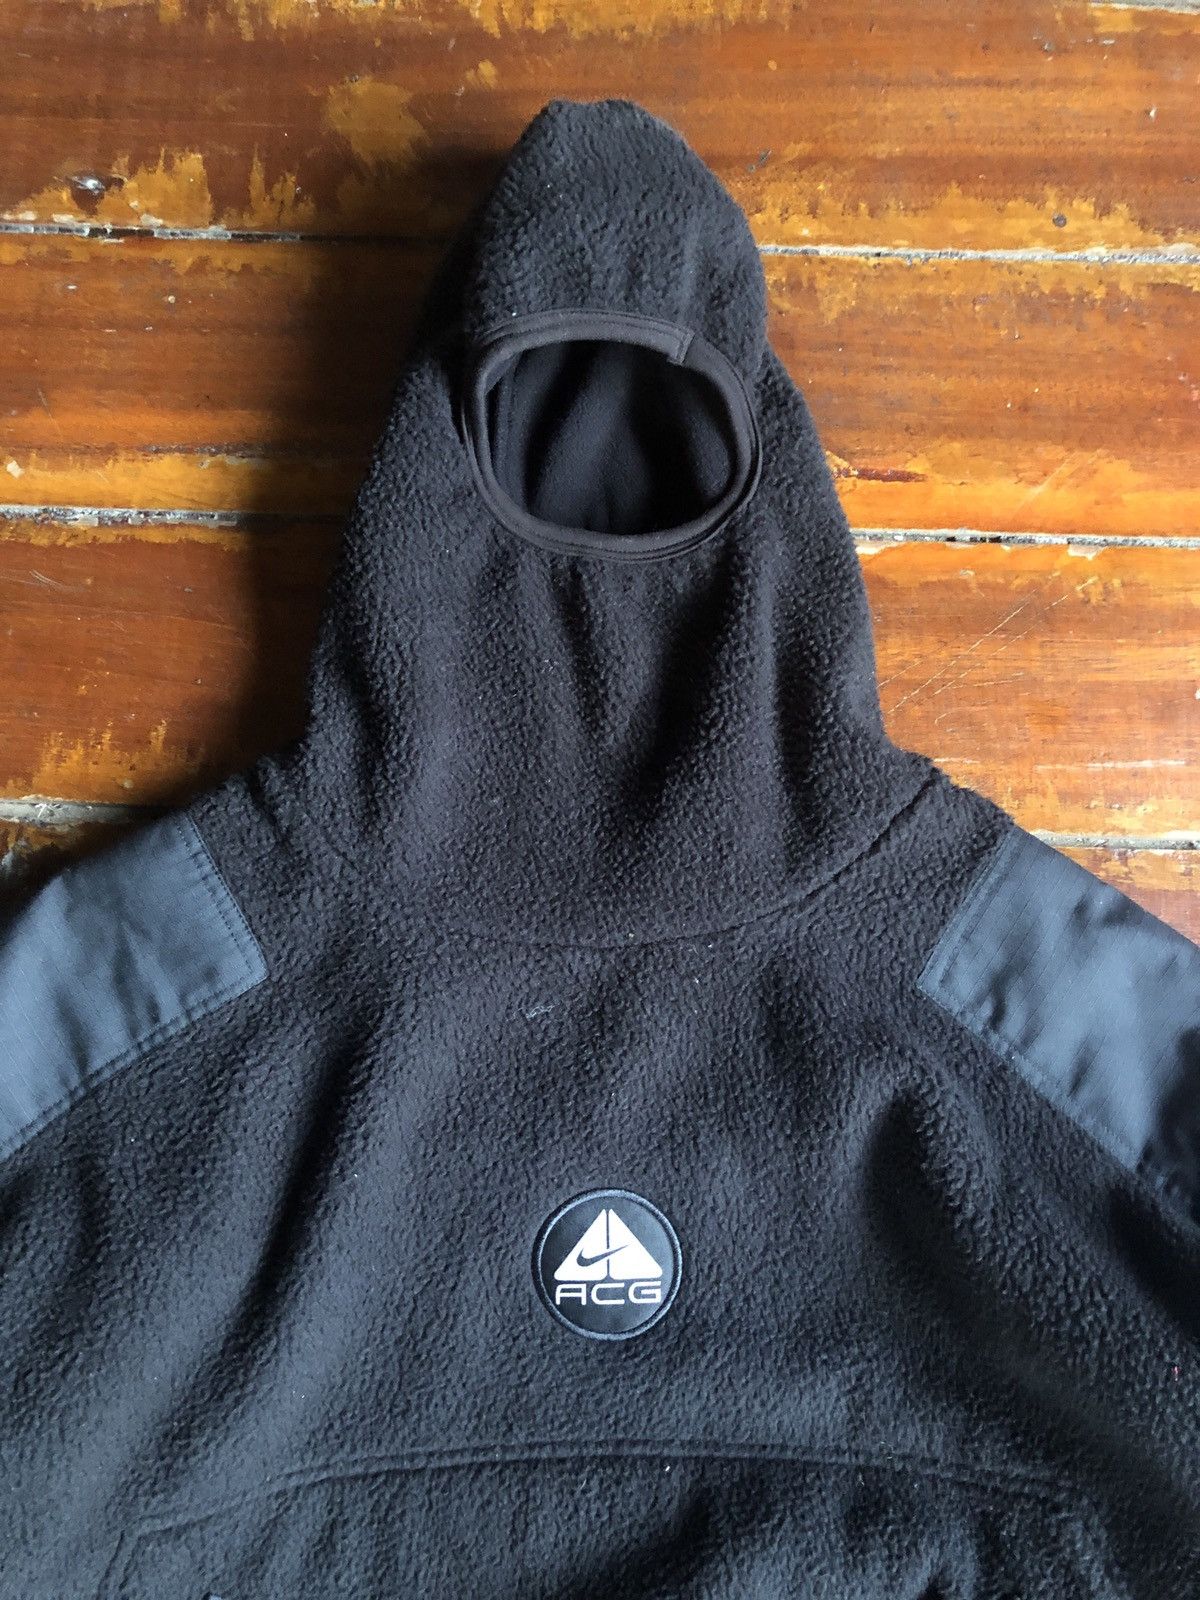 Nike ACG Nike ACG Sherpa Balaclava fleece hoodie Size US S / EU 44-46 / 1 - 4 Thumbnail